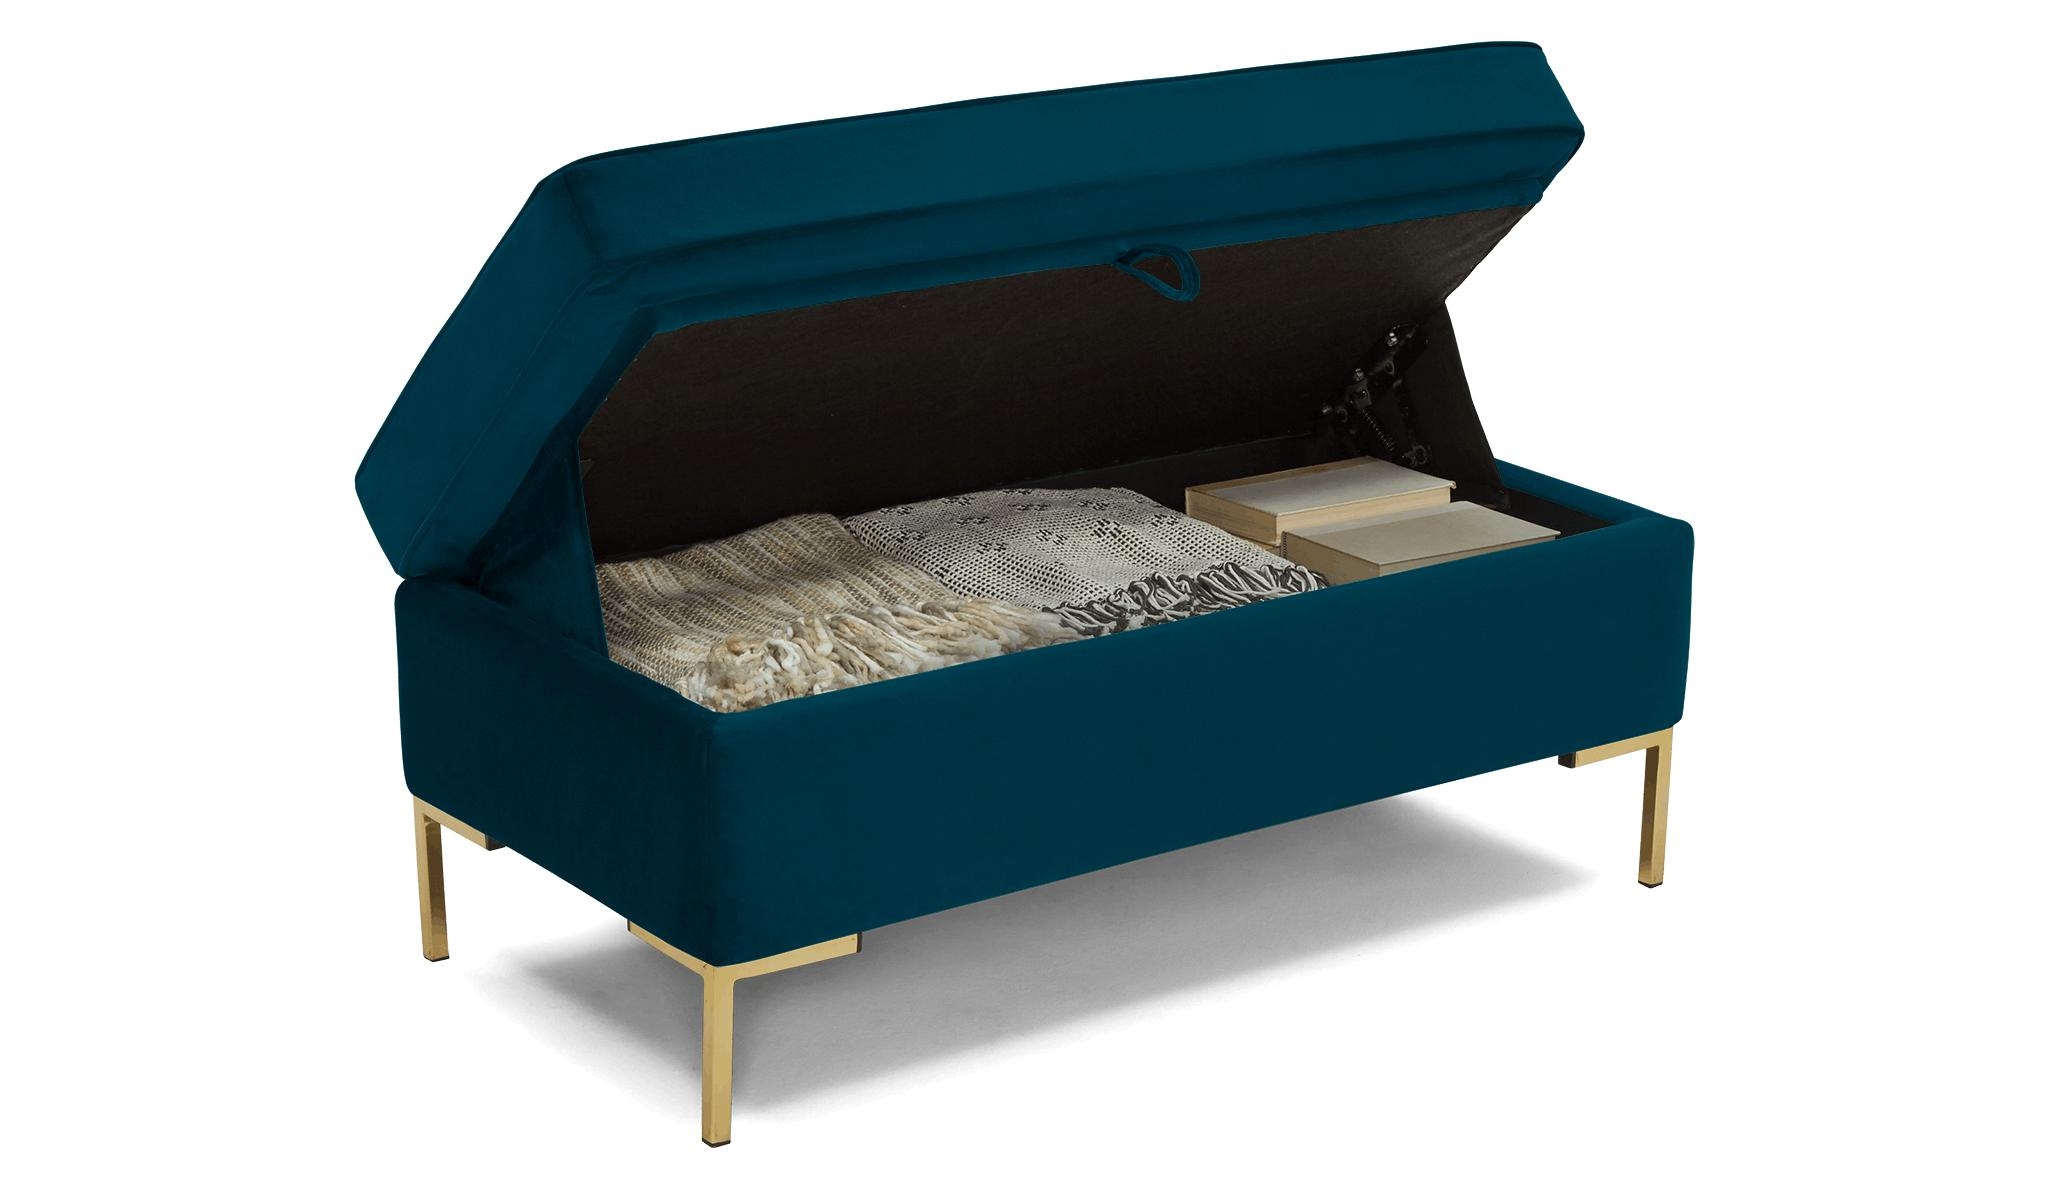 Blue Dee Mid Century Modern Bench with Storage - Key Largo Zenith Teal - Image 2